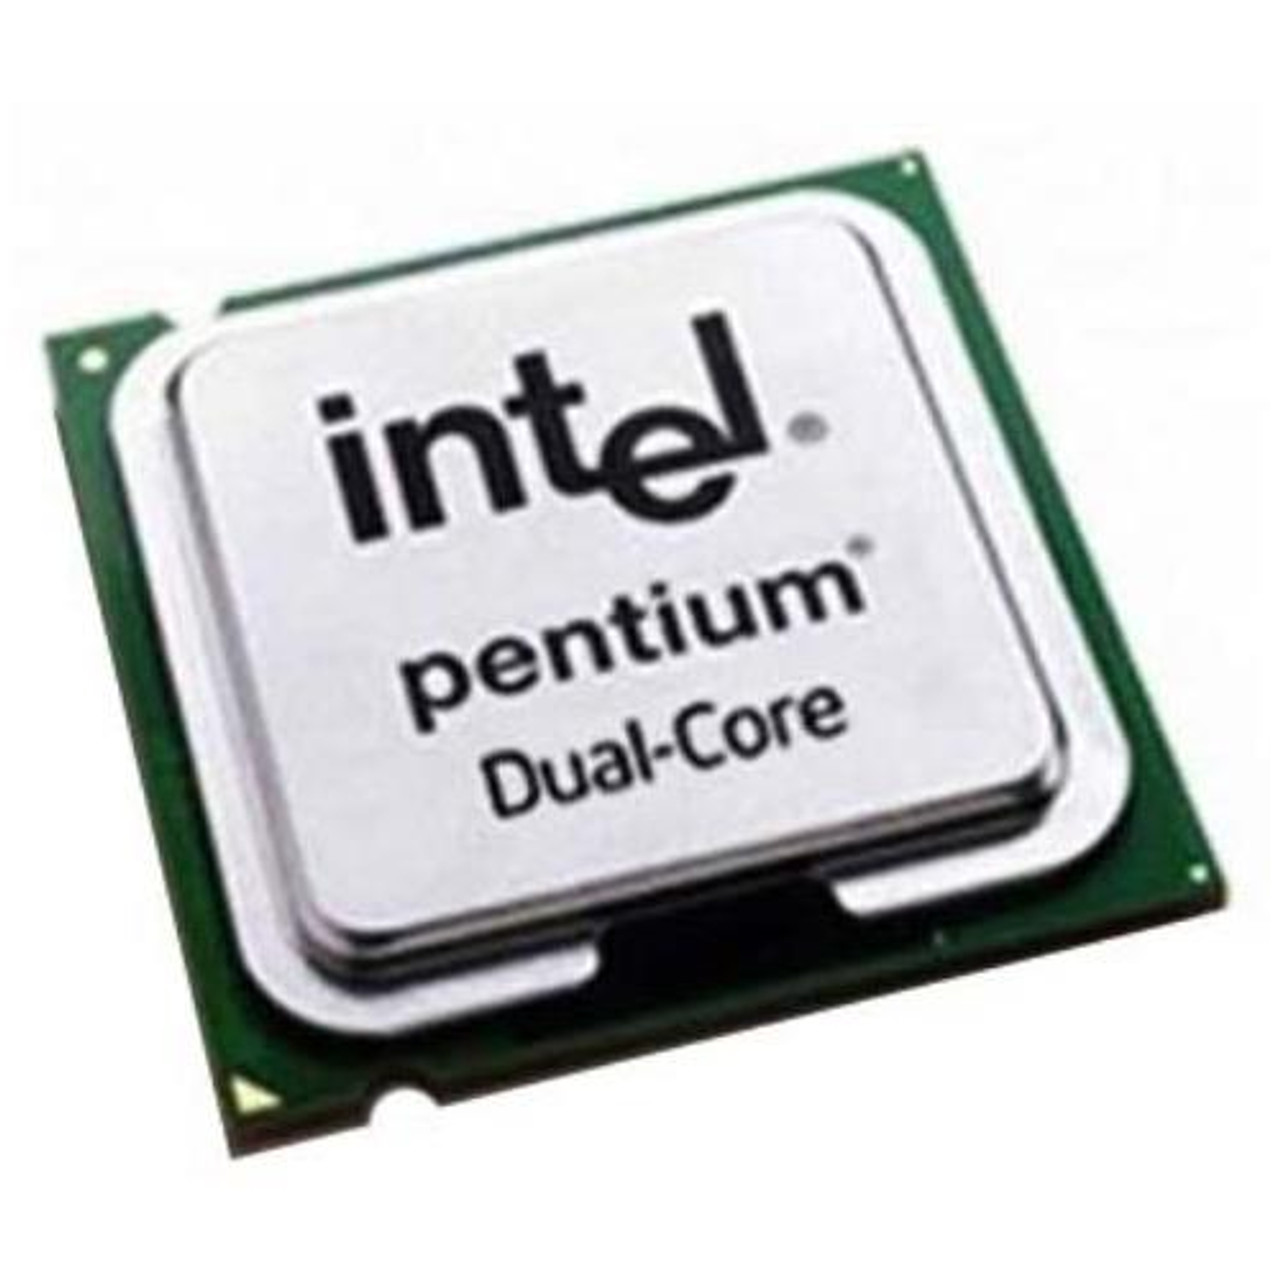 E5300 Intel Pentium Dual-Core 2.60 GHz Processor Unboxed OEM